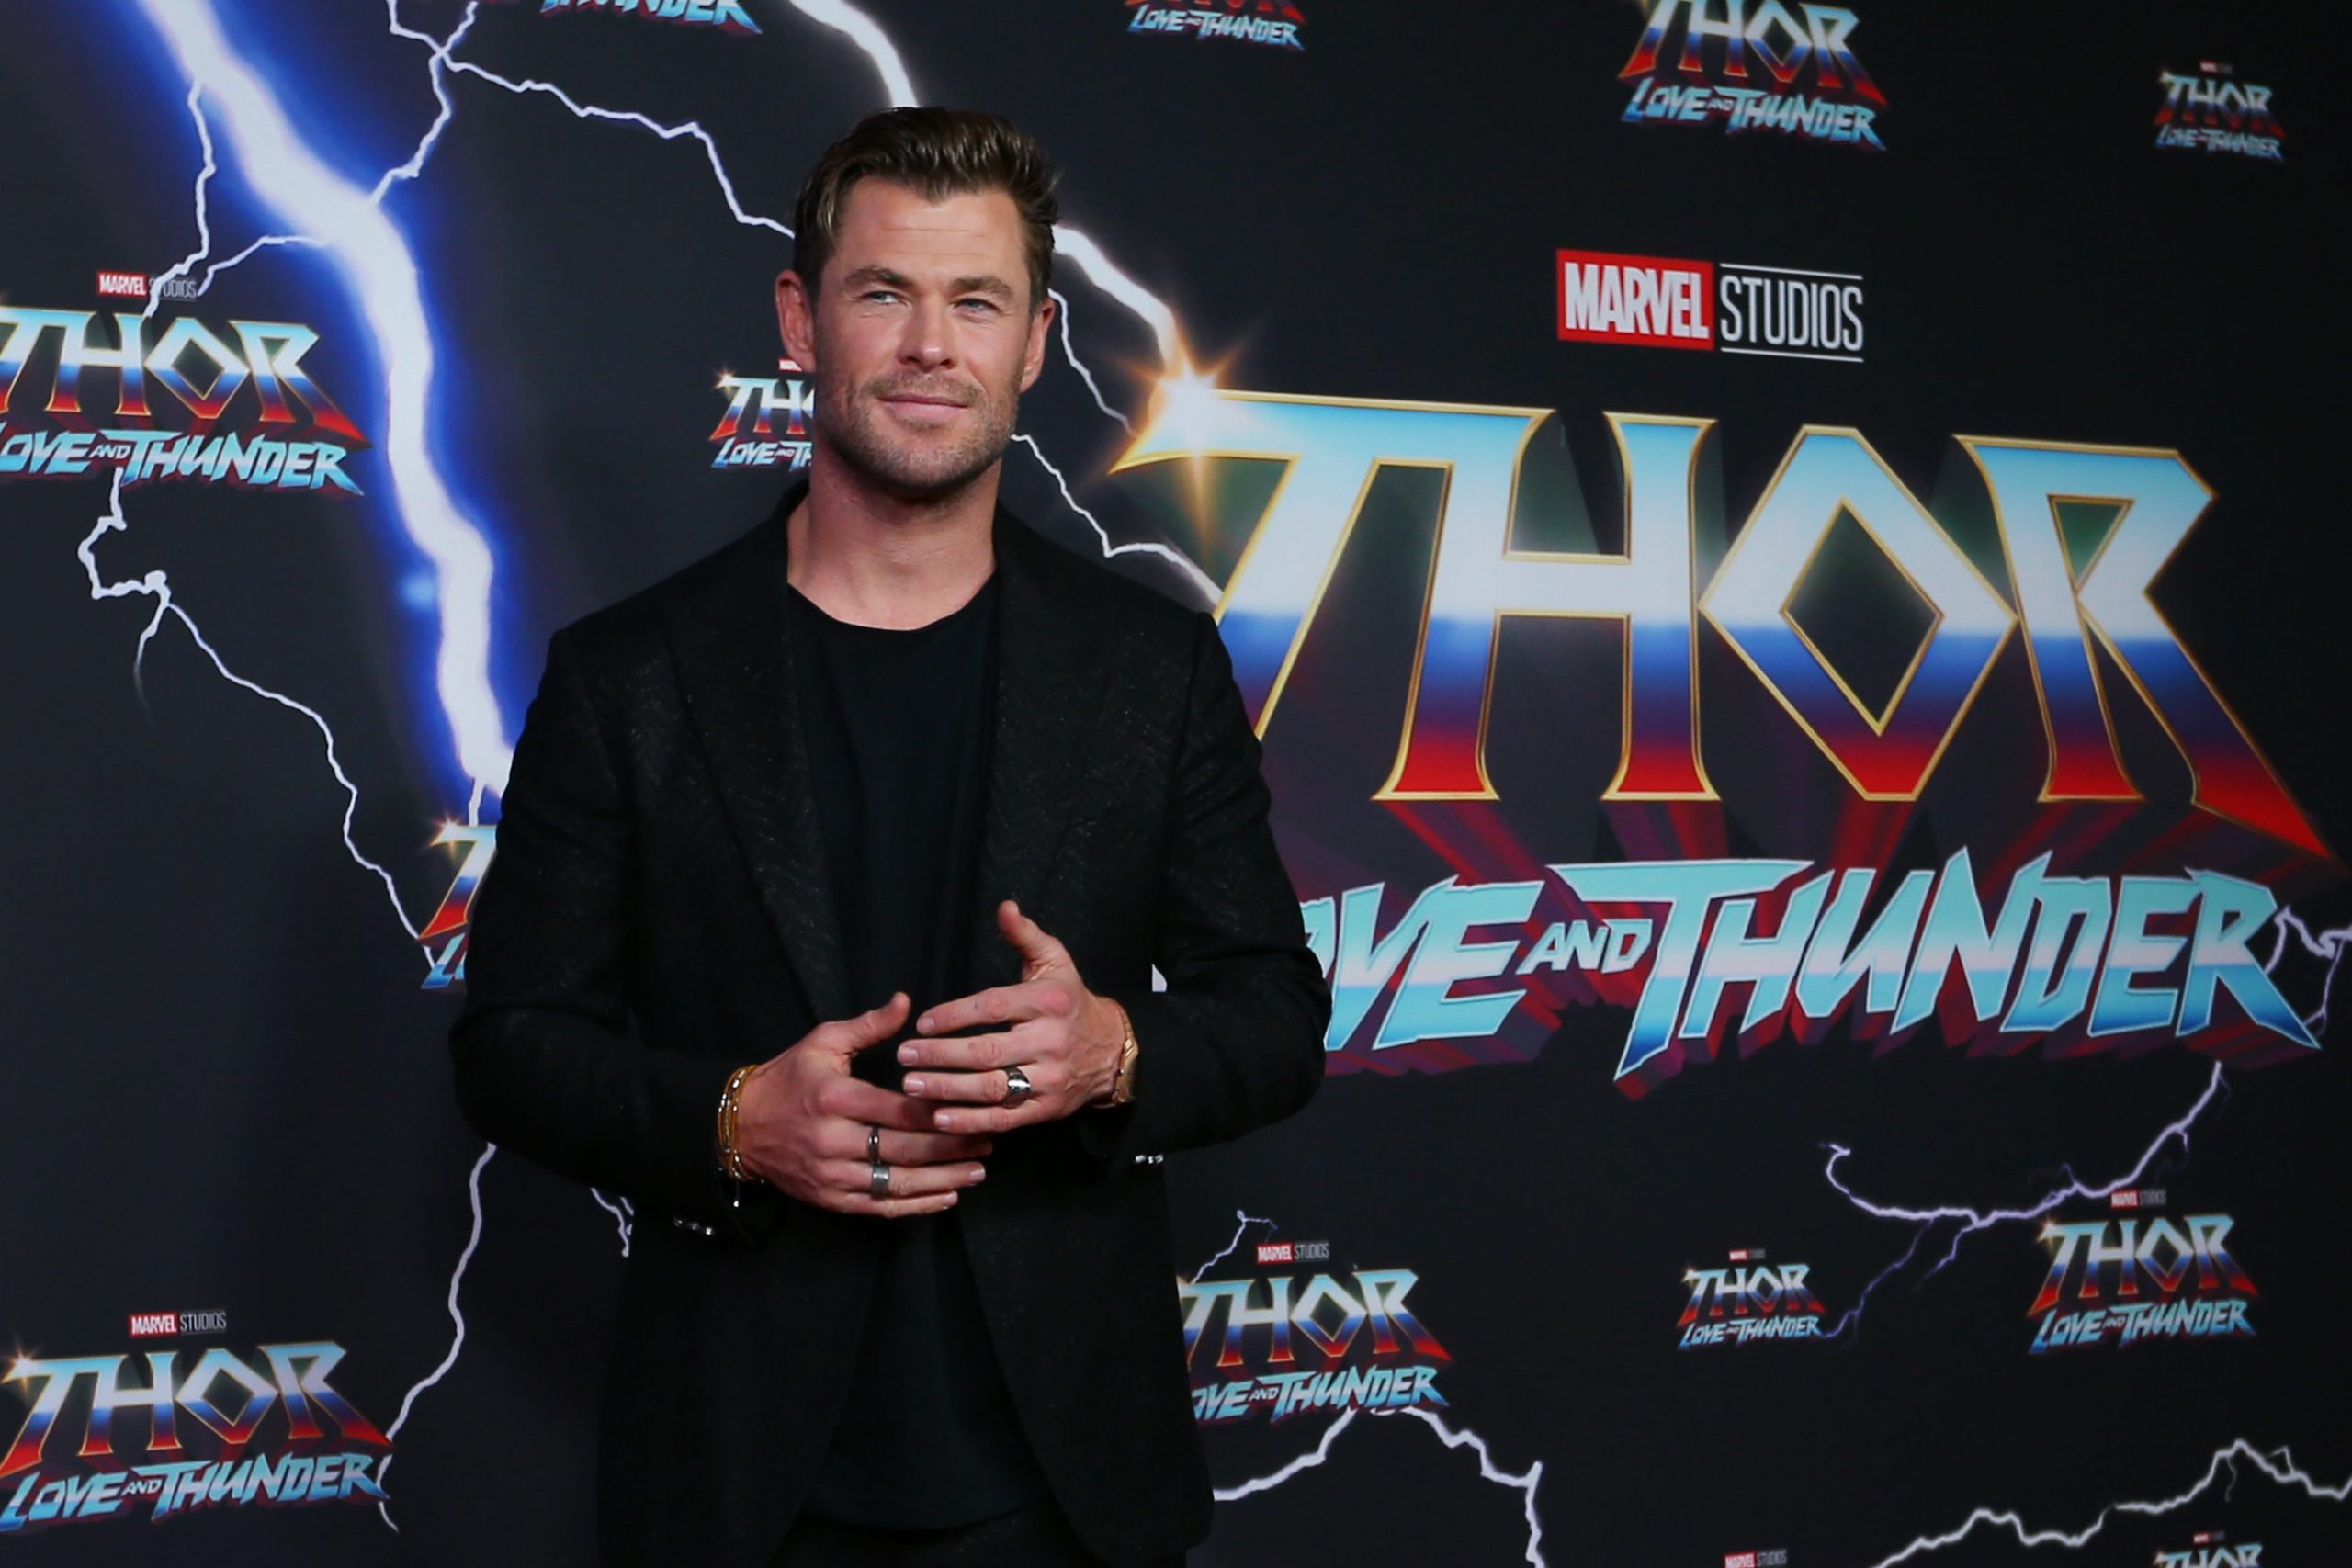 Marvel Studios' Thor: Love and Thunder